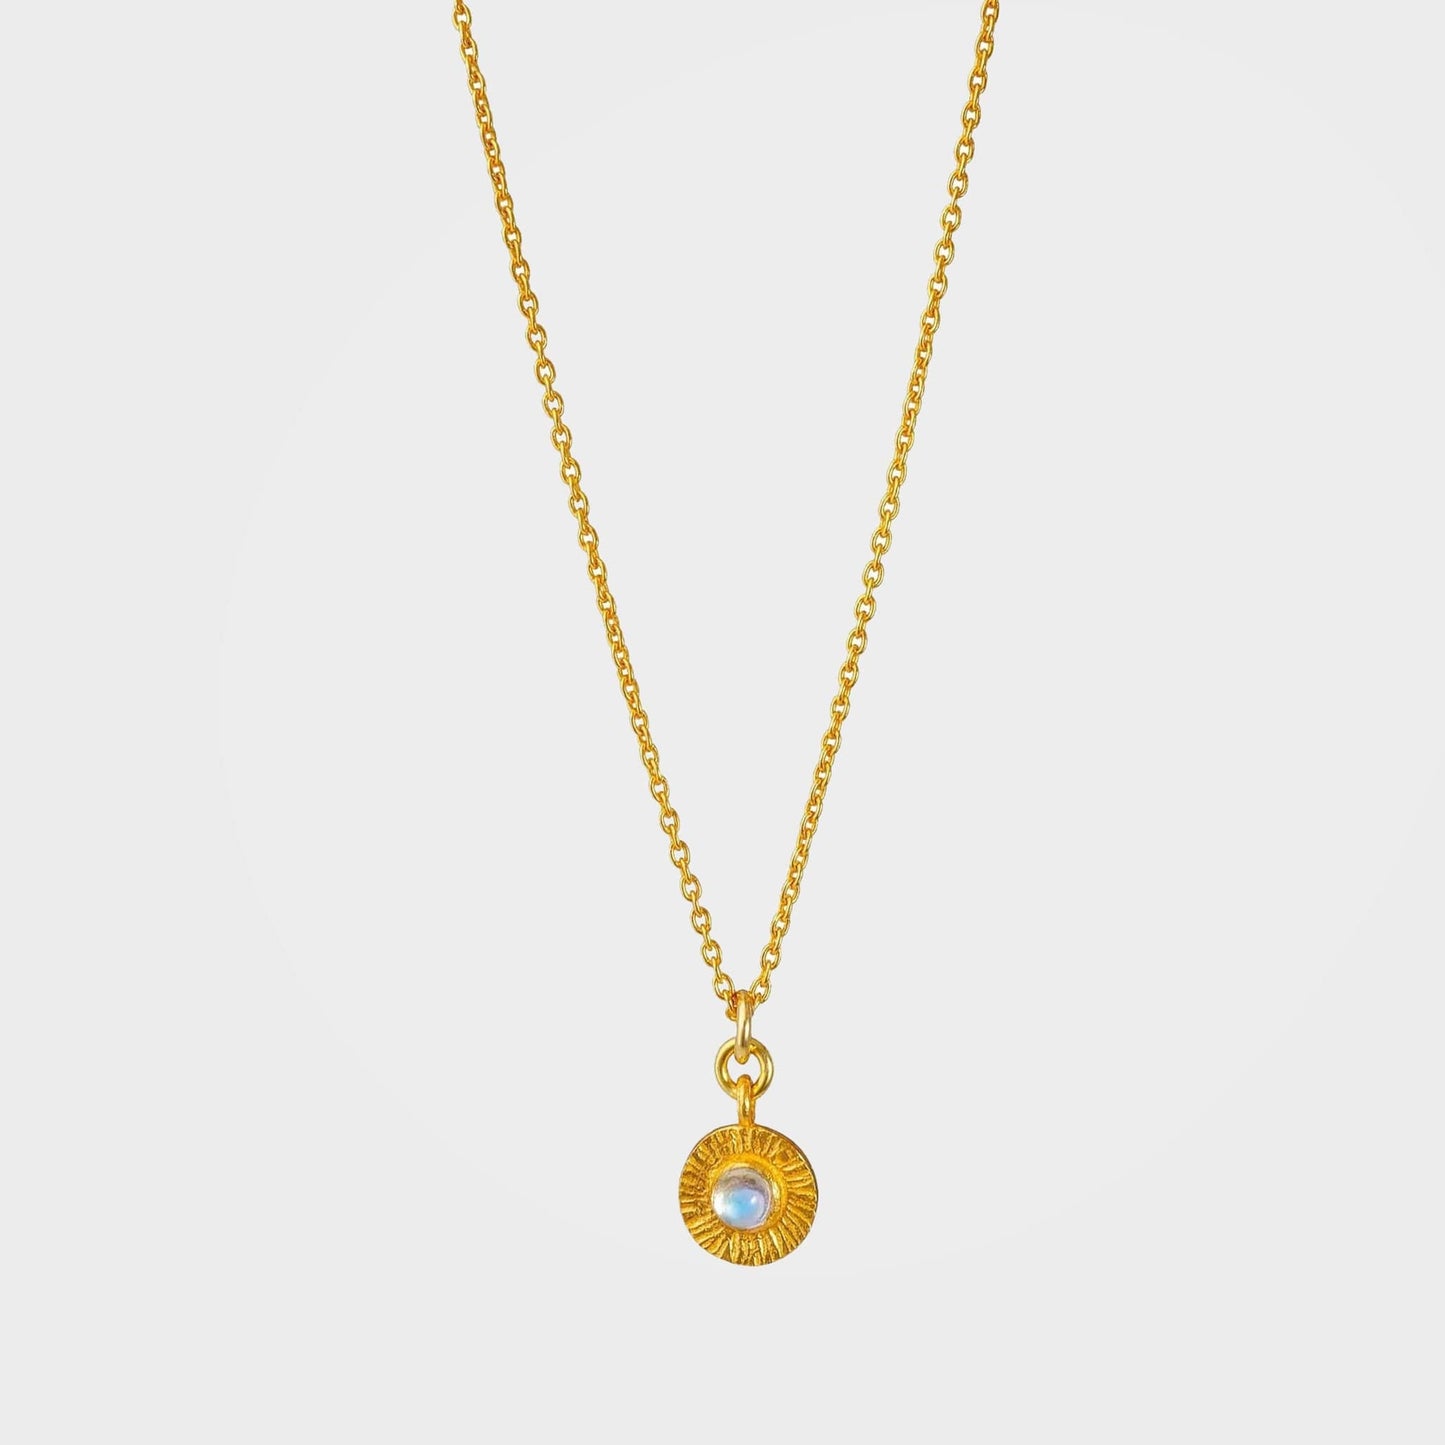 Gold Vermeil Sun Necklace with Moonstone - Soluna | By Lunar James